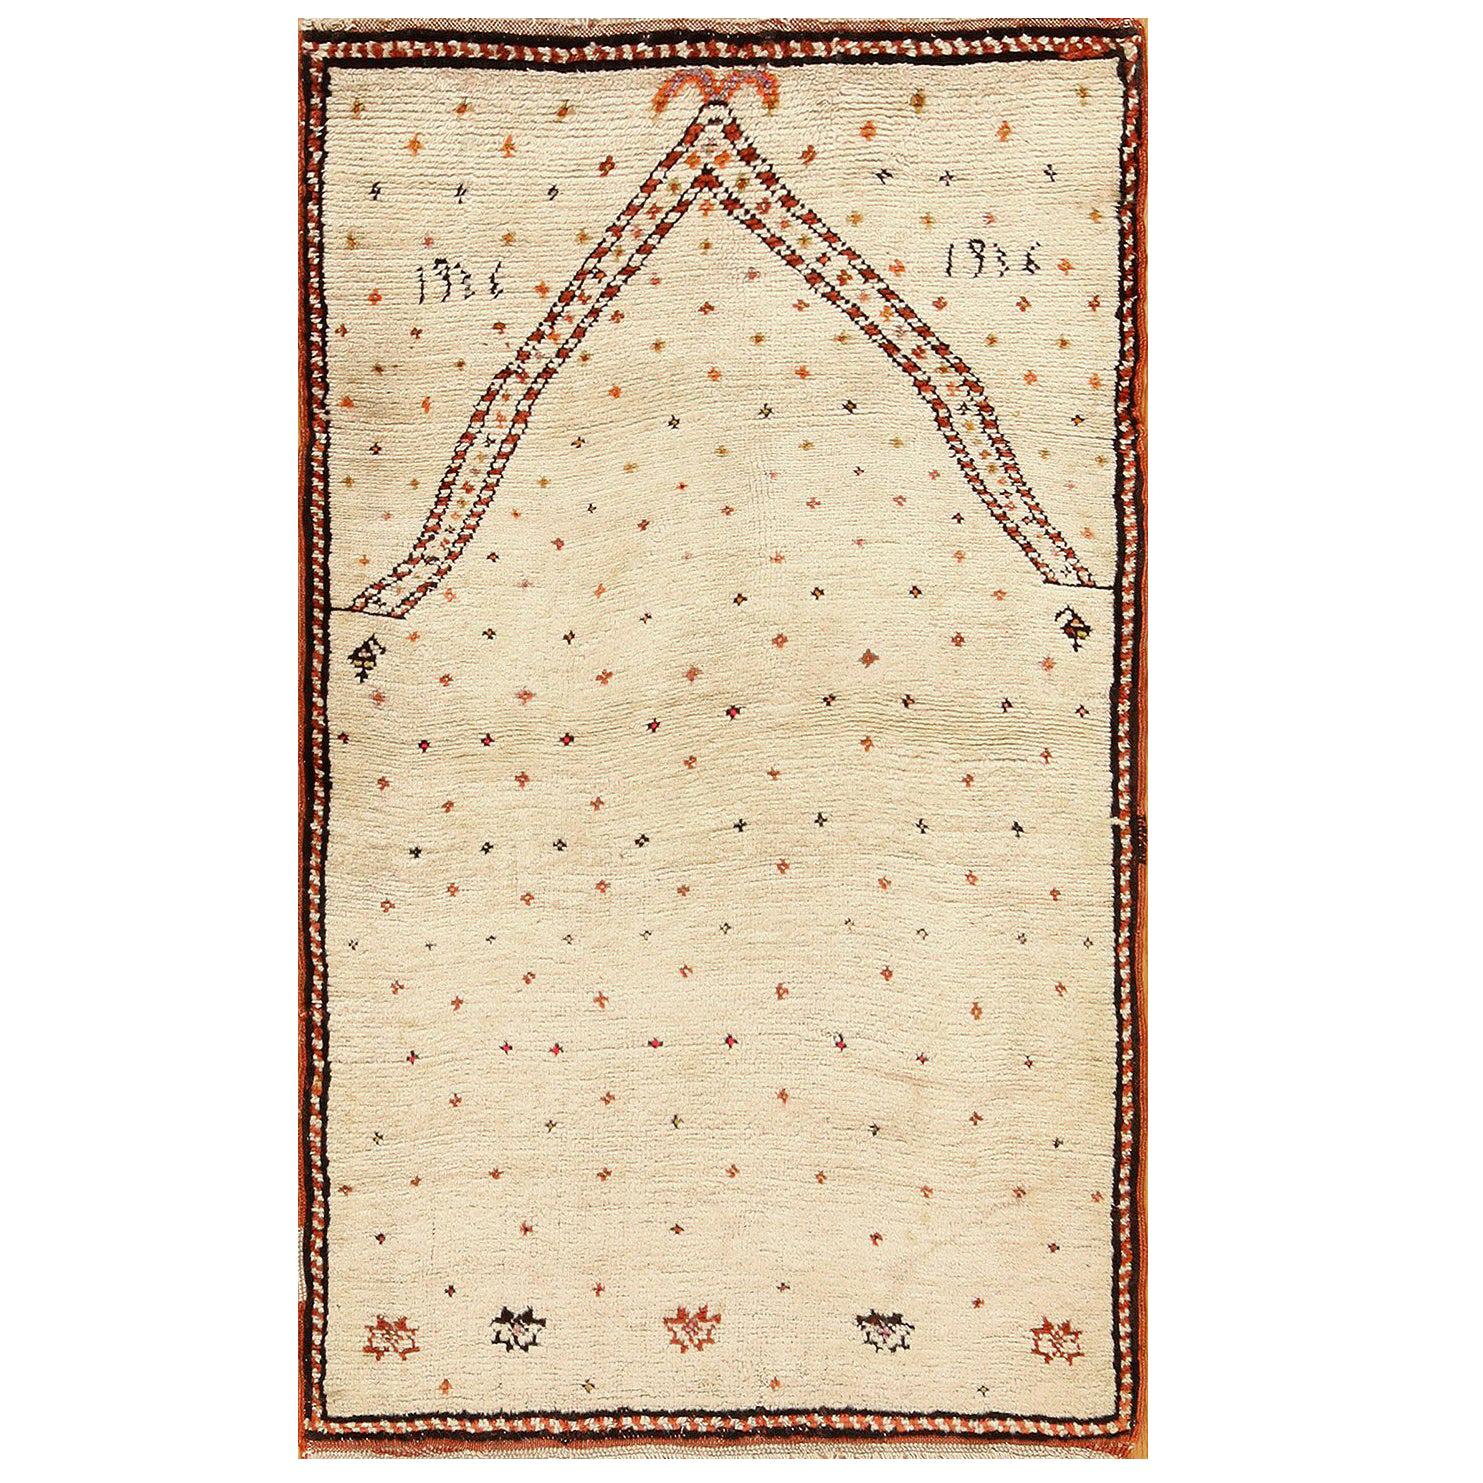 Antique Tribal Prayer Design Persian Gabbeh Rug. Size: 3 ft x 5 ft 3 in